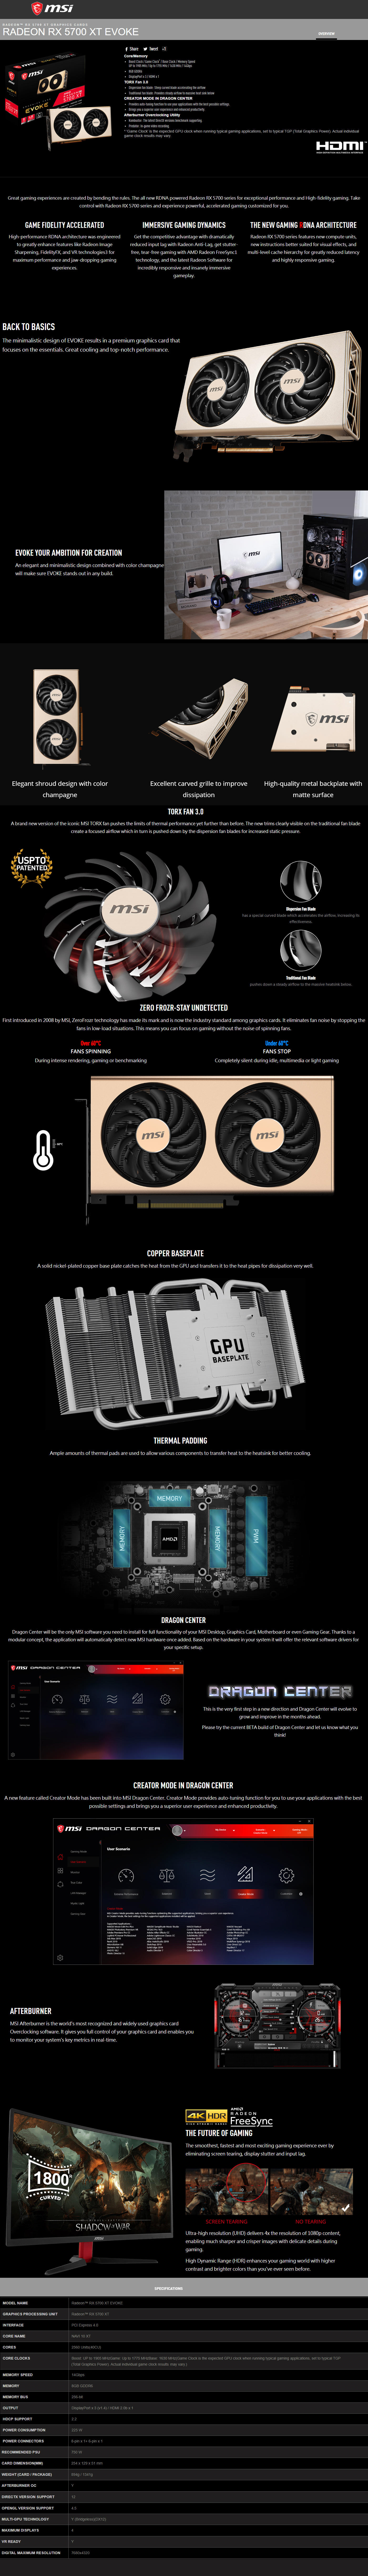 Buy Online MSI Radeon RX 5700 XT EVOKE 8GB GDDR6